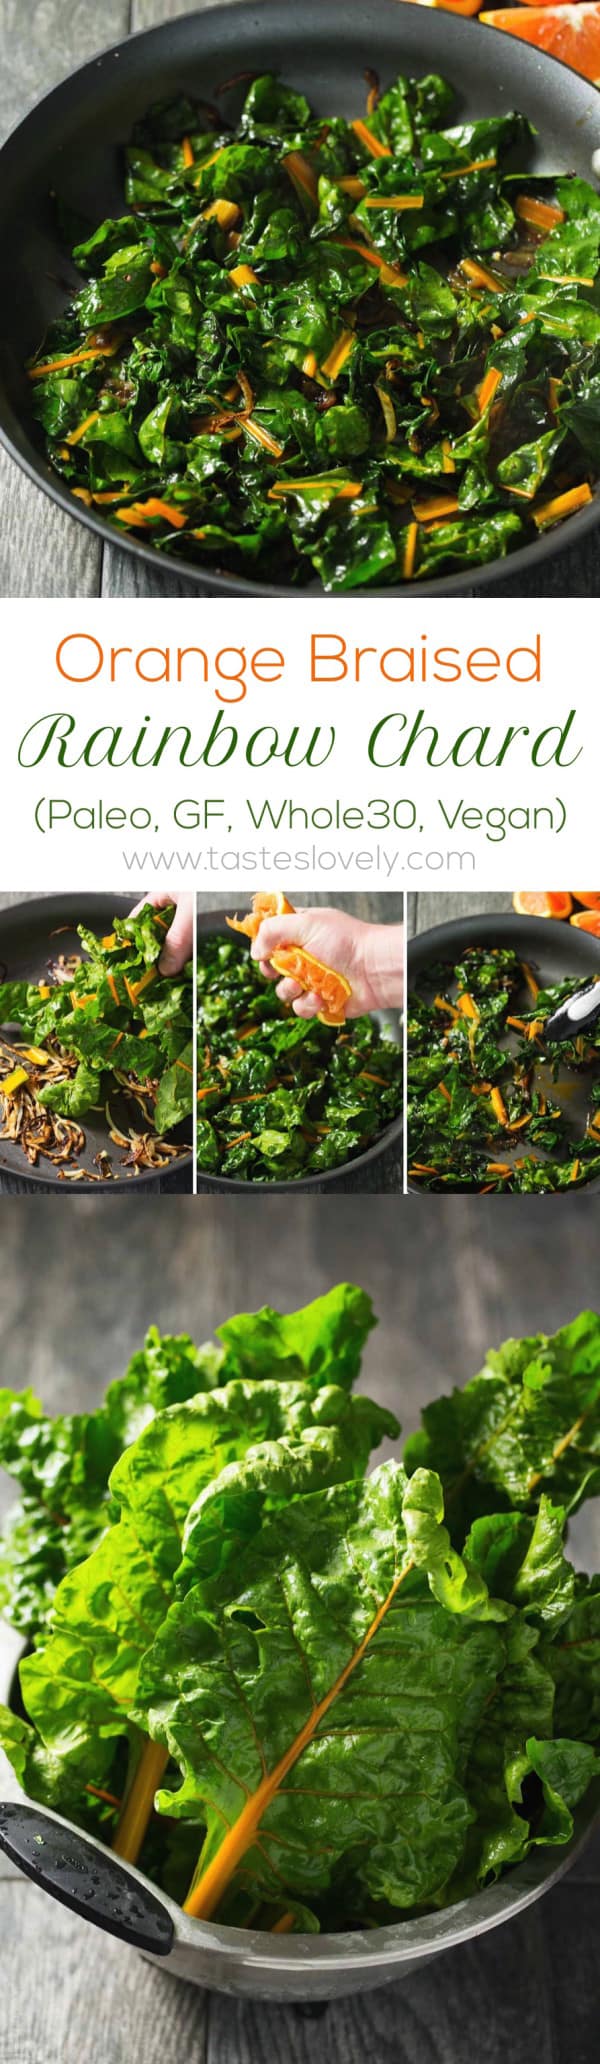 Orange Braised Rainbow Chard (paleo, vegan, gluten free, whole 30)